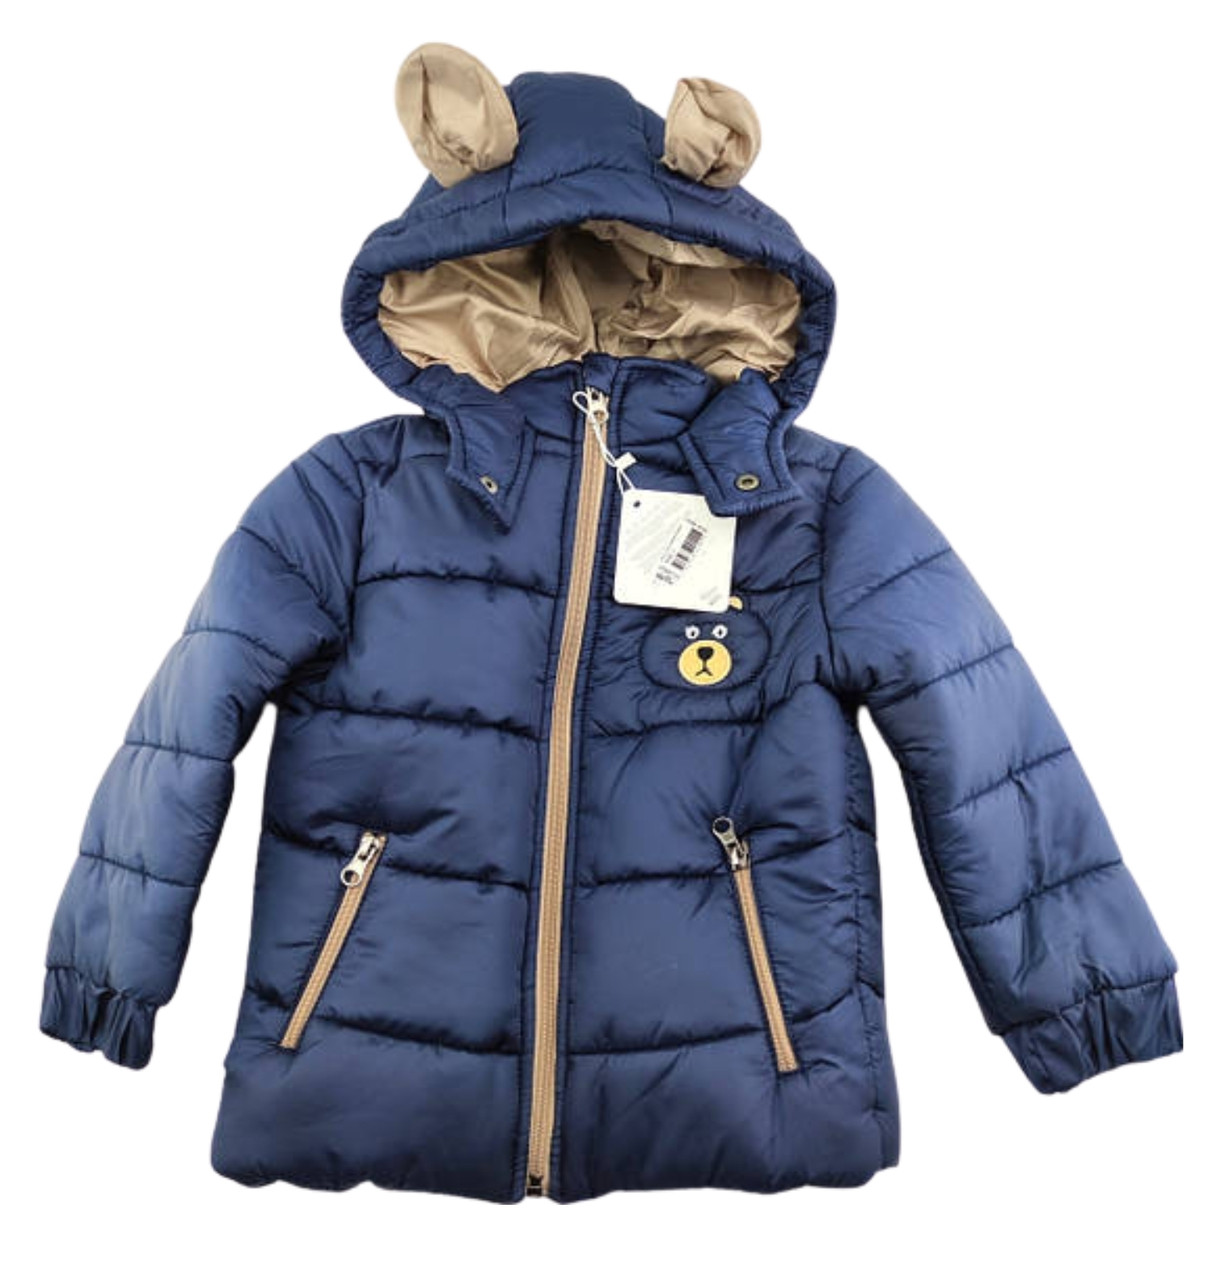 Дитяча куртка 2 роки Туреччина з капюшоном для хлопчика зимова синя (КДМА30)